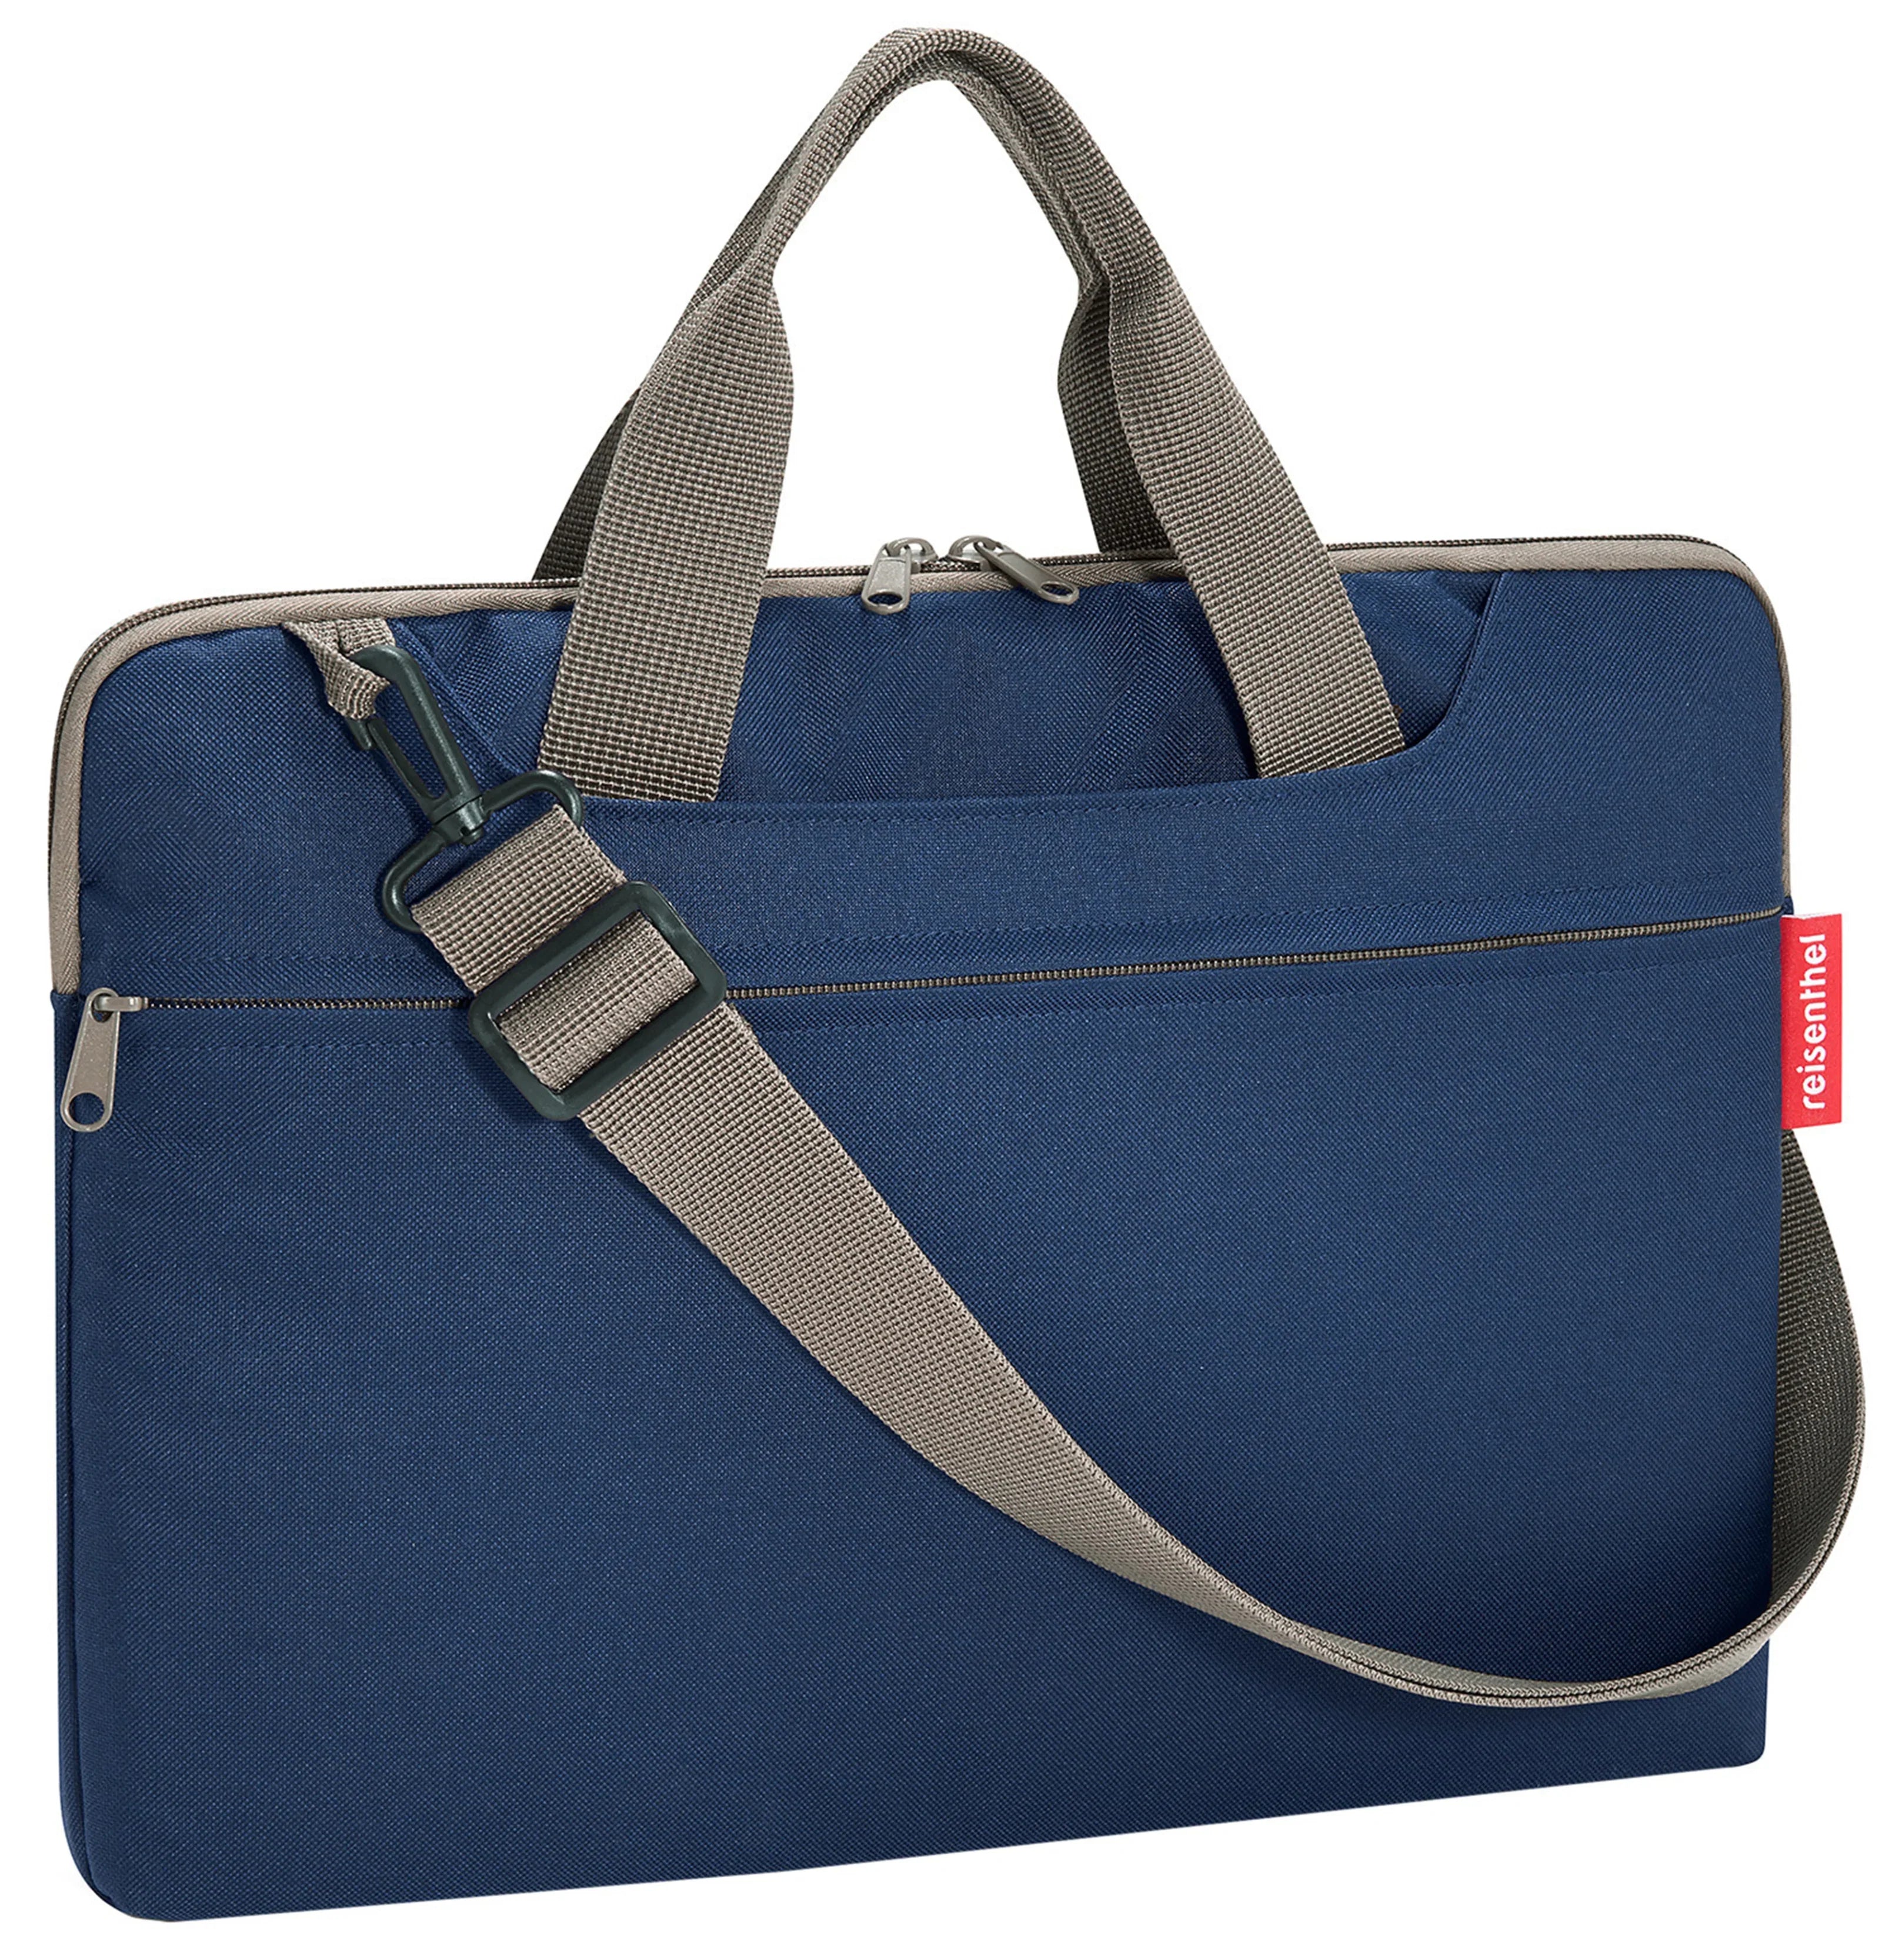 Reisenthel Travelling laptop bag 40 cm - dark blue